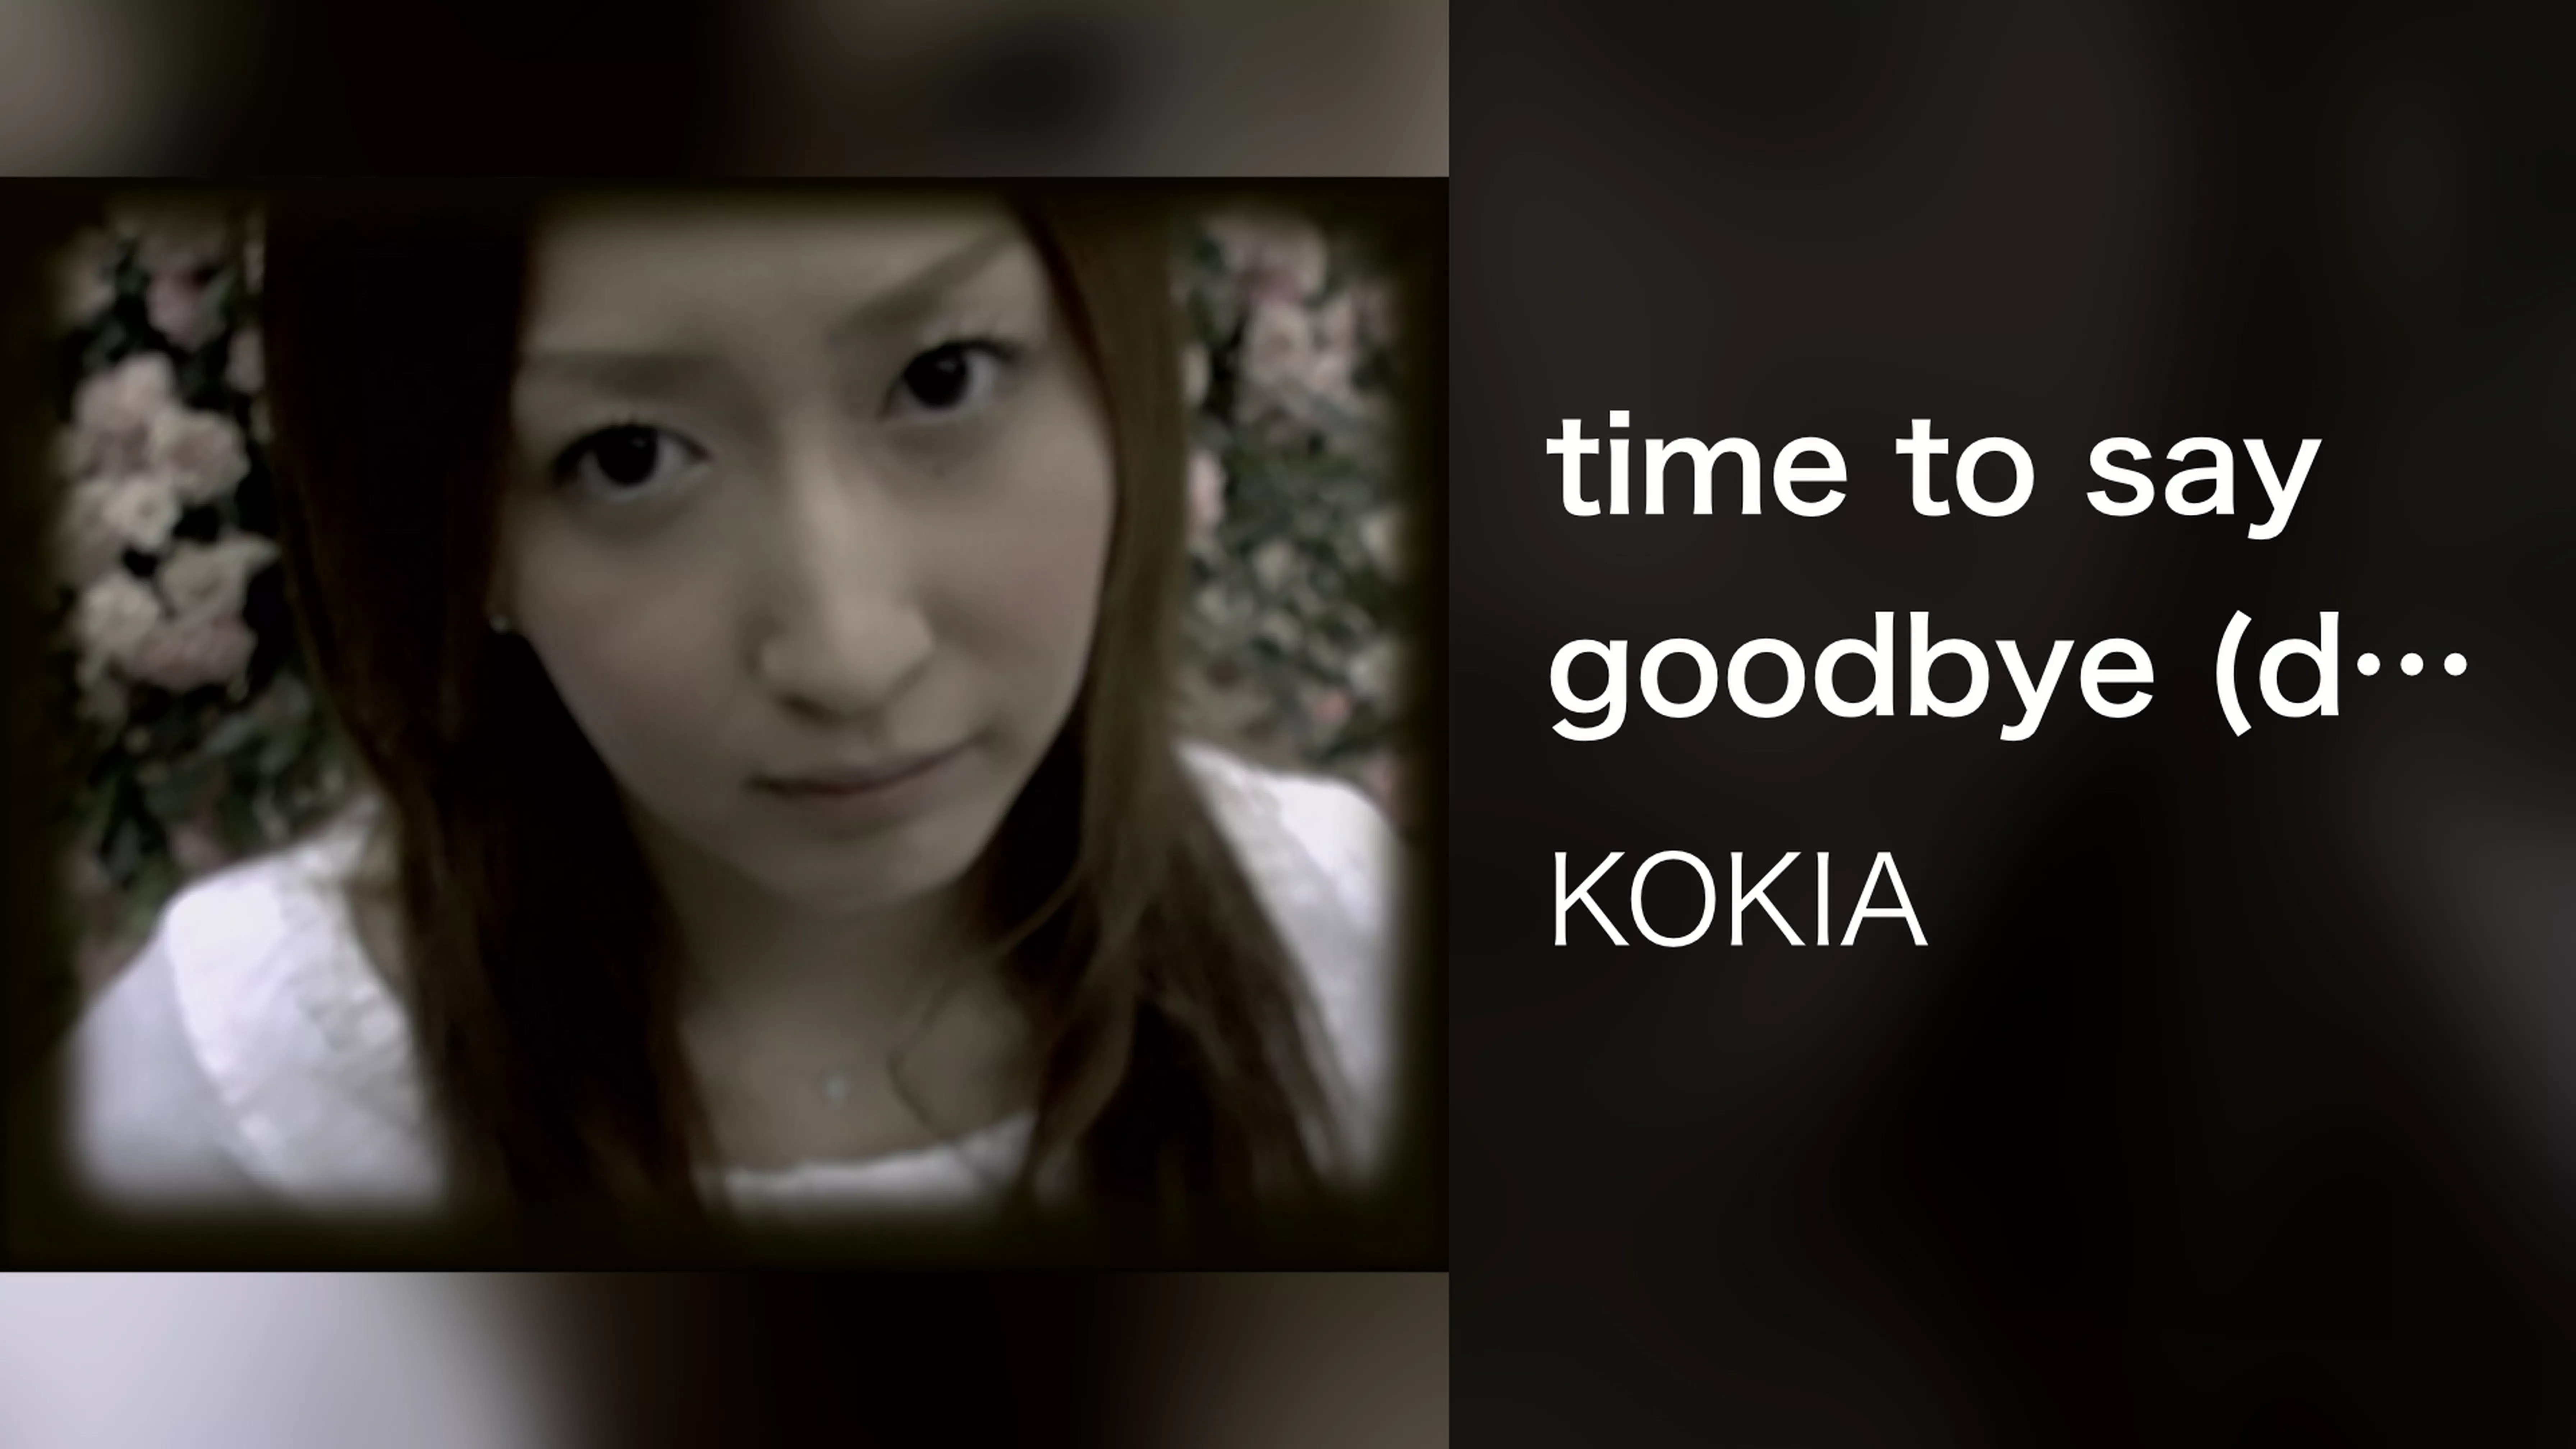 time to say goodbye (duet"KOKIA & Piano")